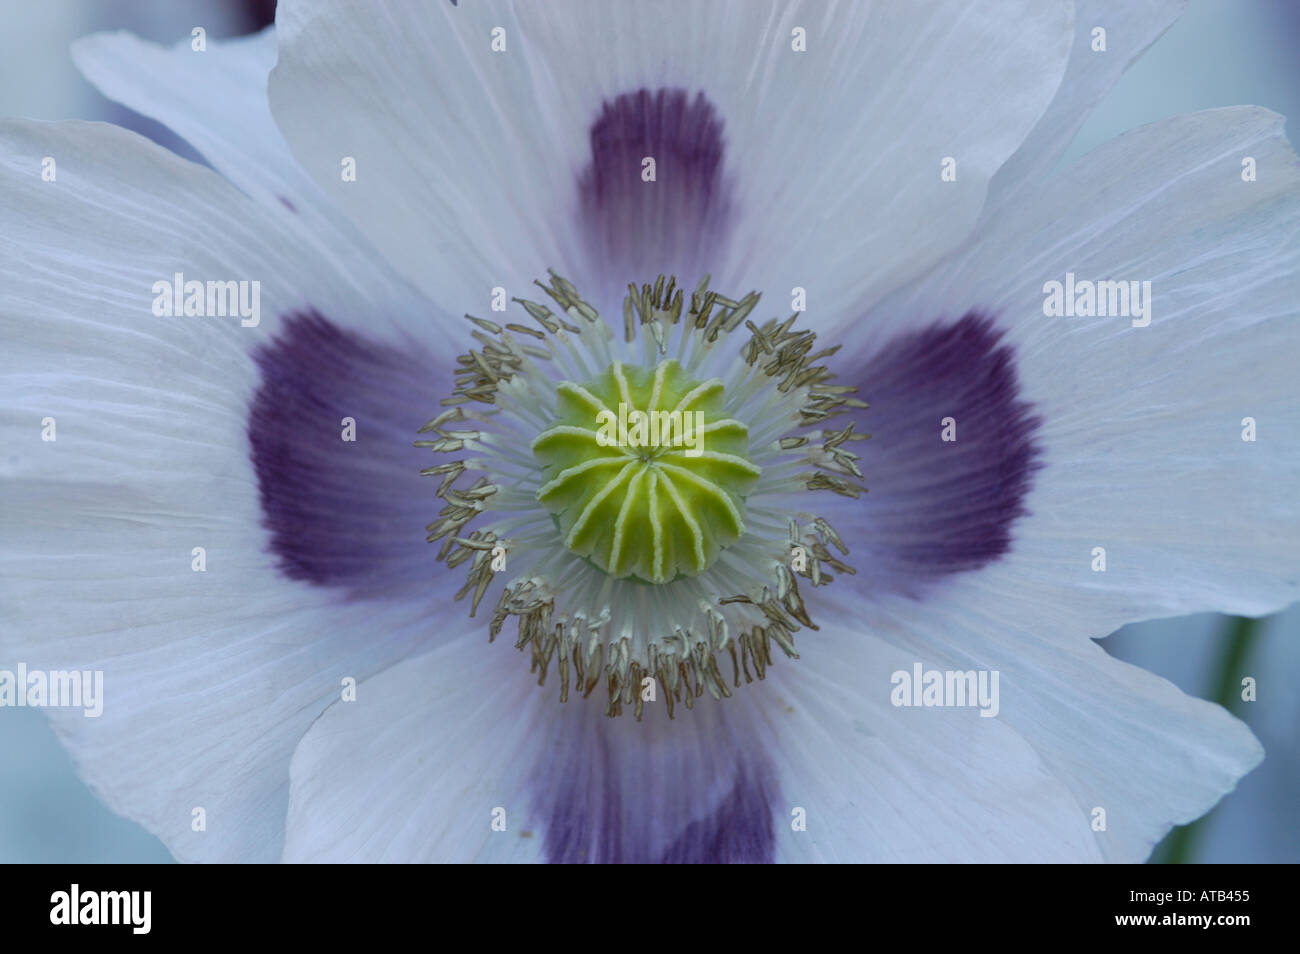 Floral parts opium poppy Stock Photo